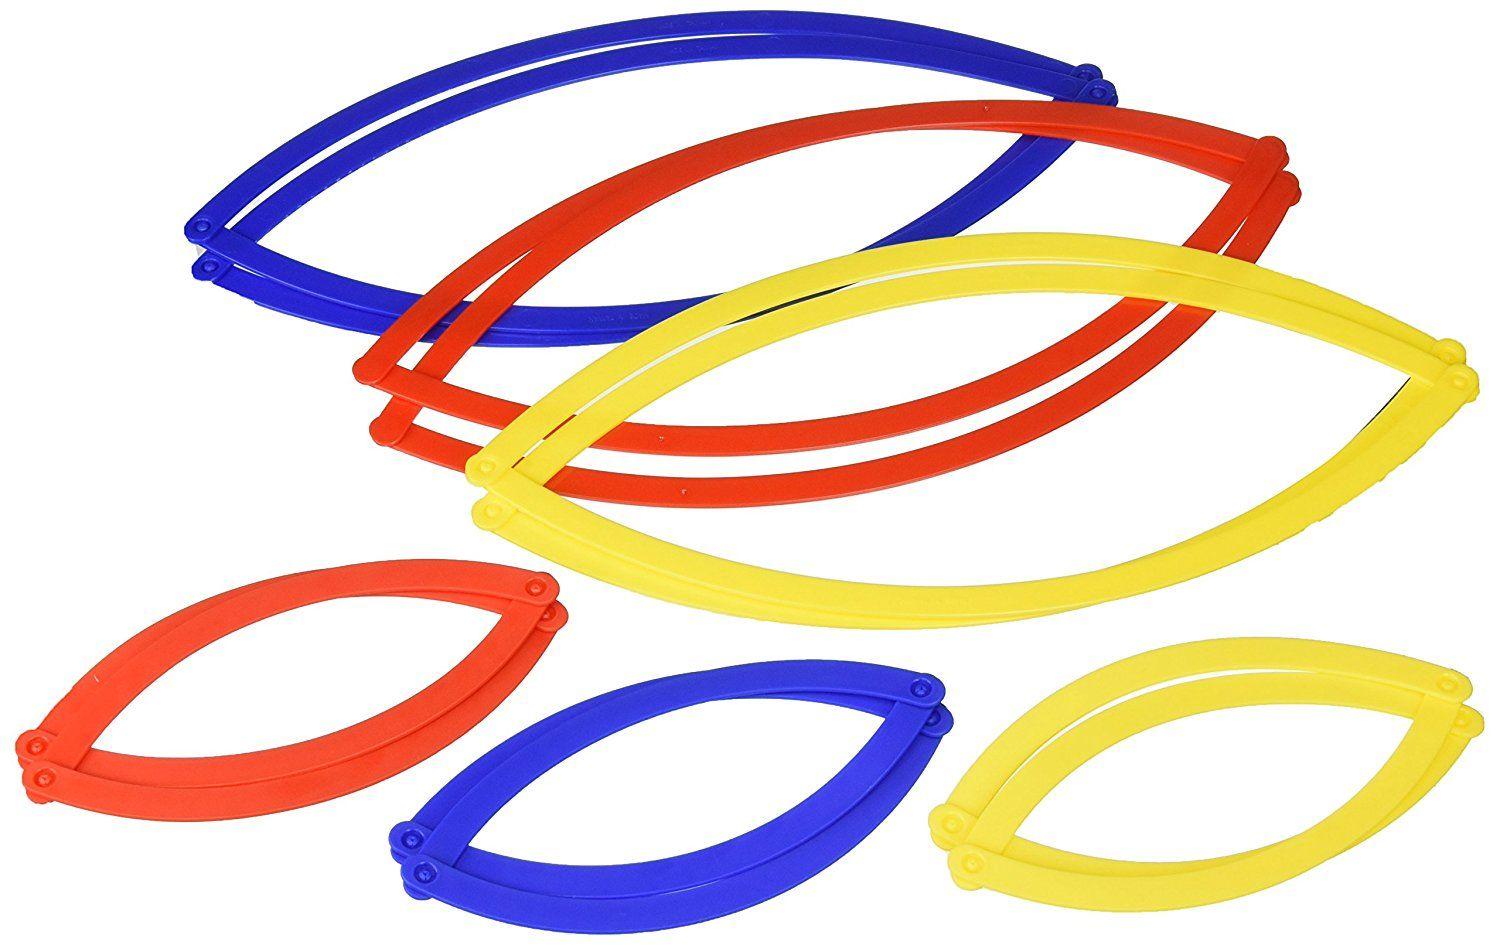 Four Circles Logo - Cheap Four Circles Logo, find Four Circles Logo deals on line at ...